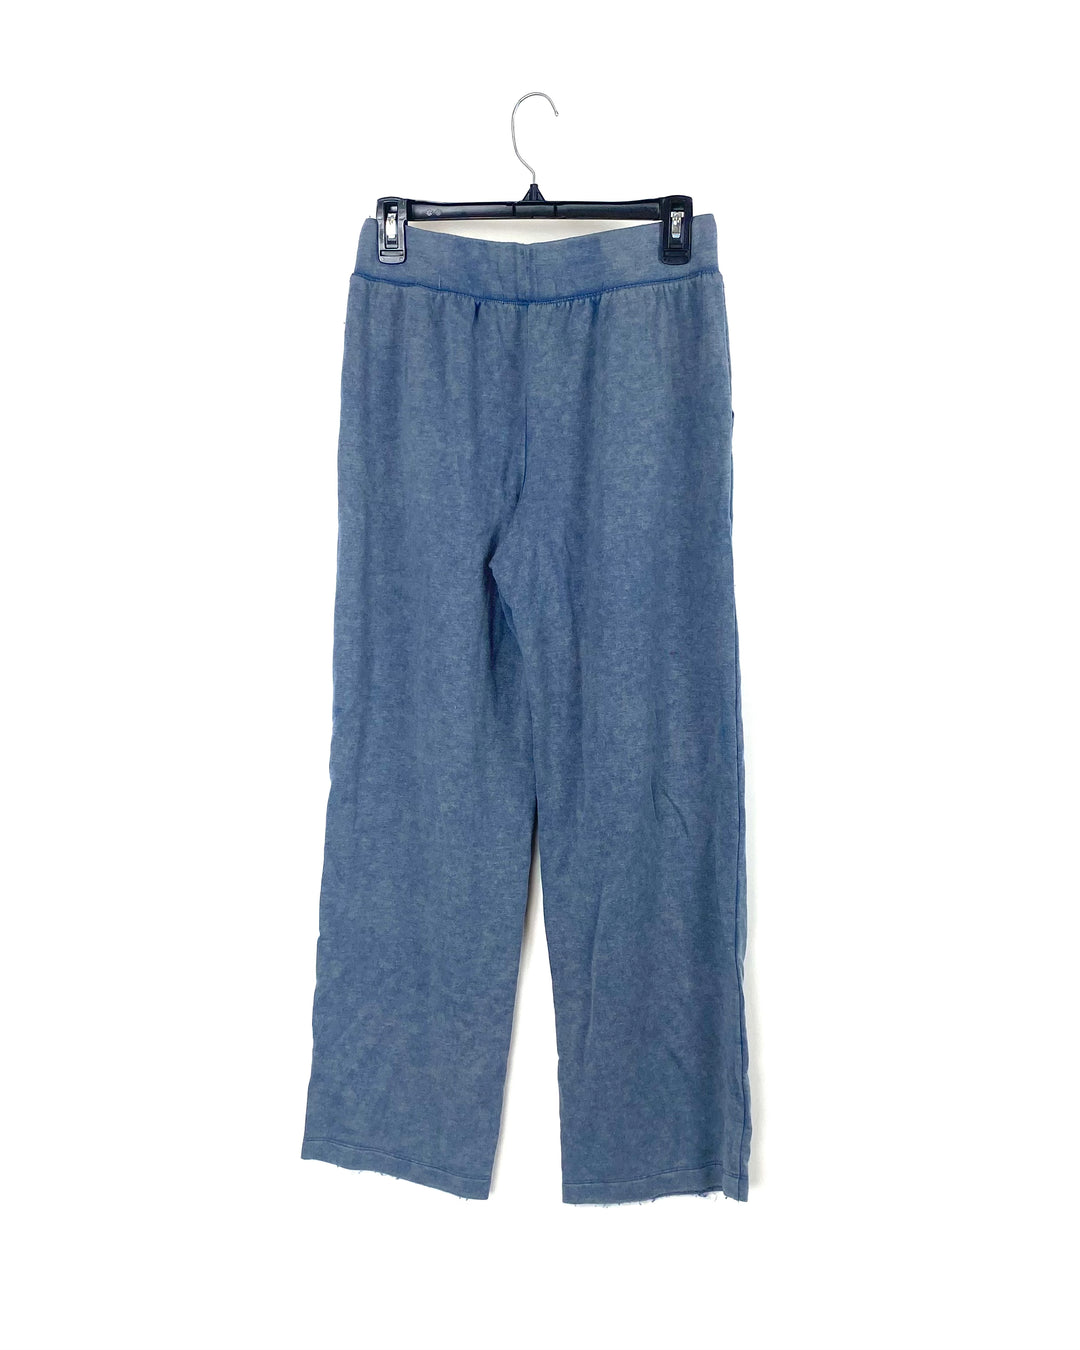 Dusty Blue Sweatpants - Small